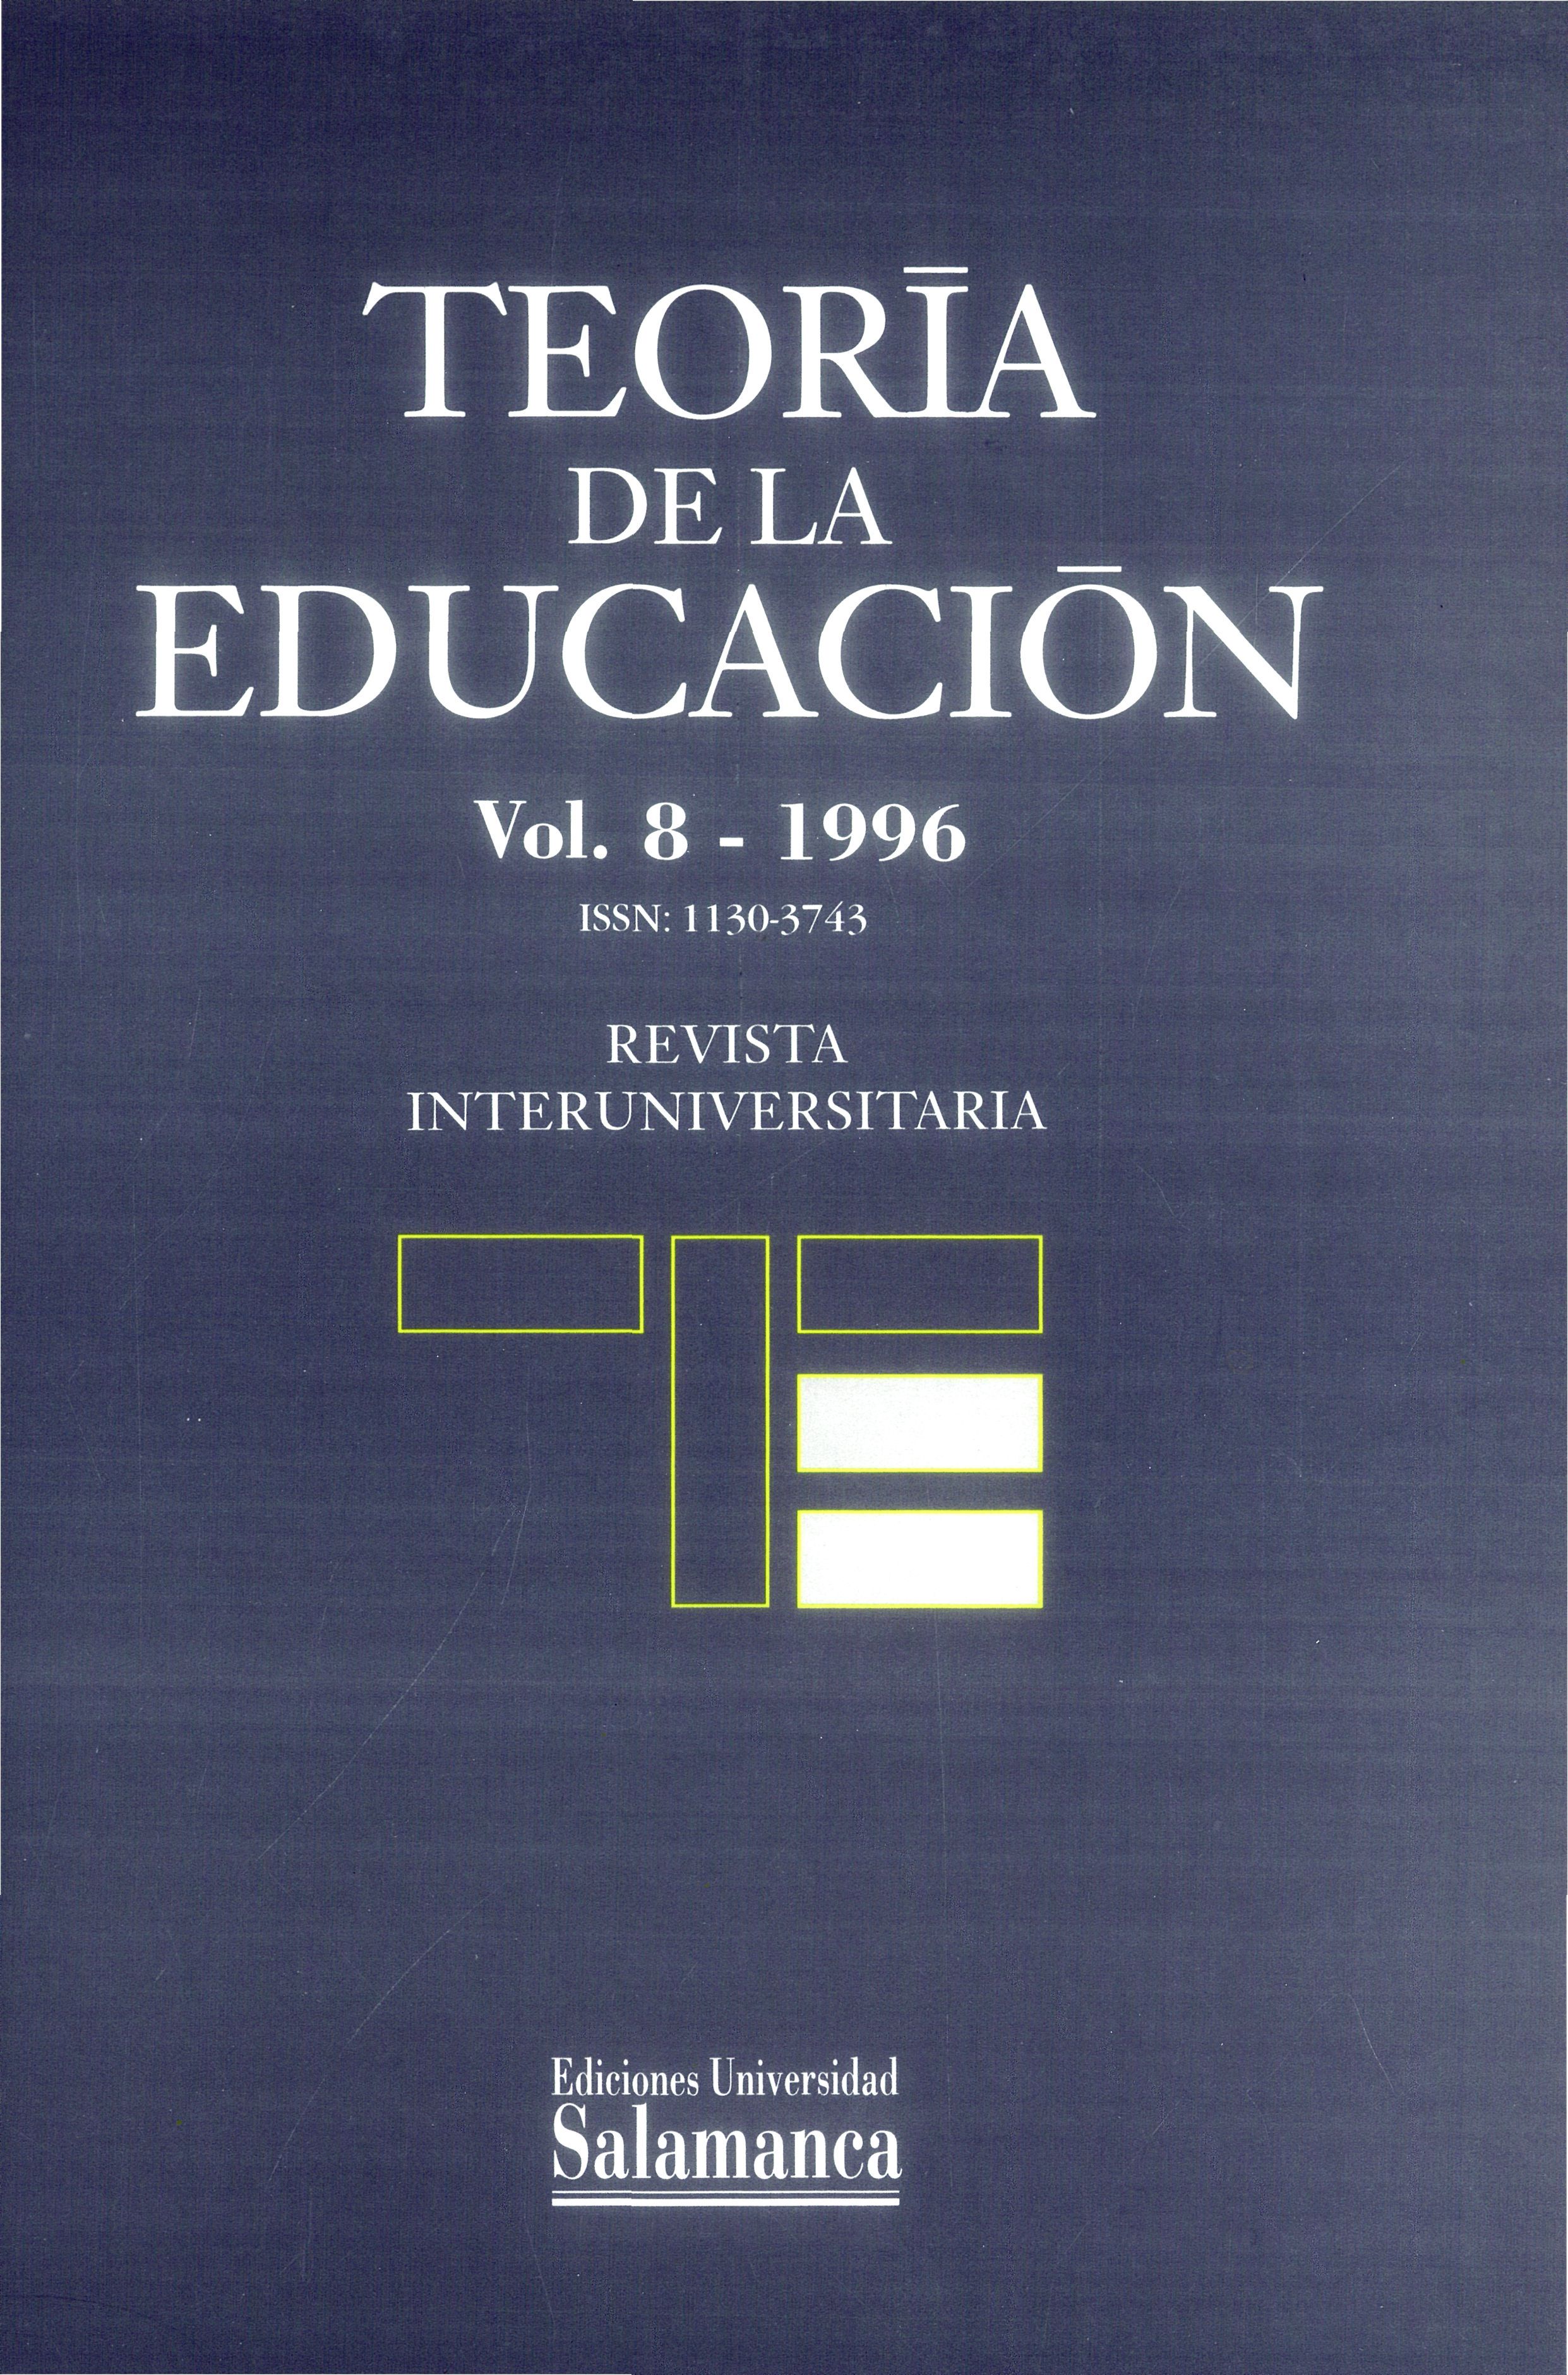                         Ver Vol. 8 (1996)
                    